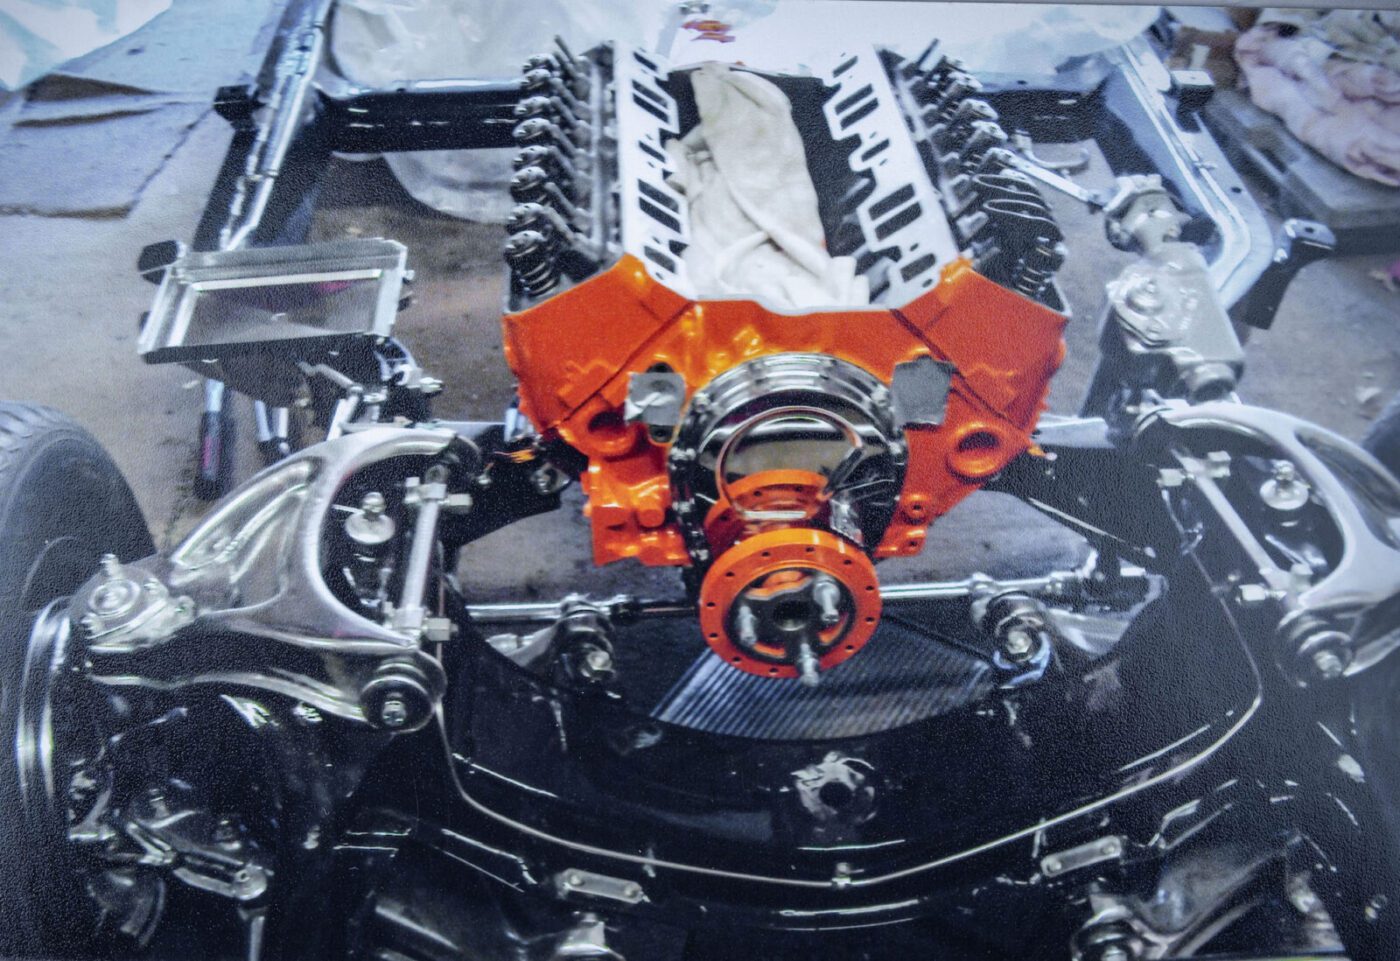 Chevrolet Corvette Sting Ray engine rebuild